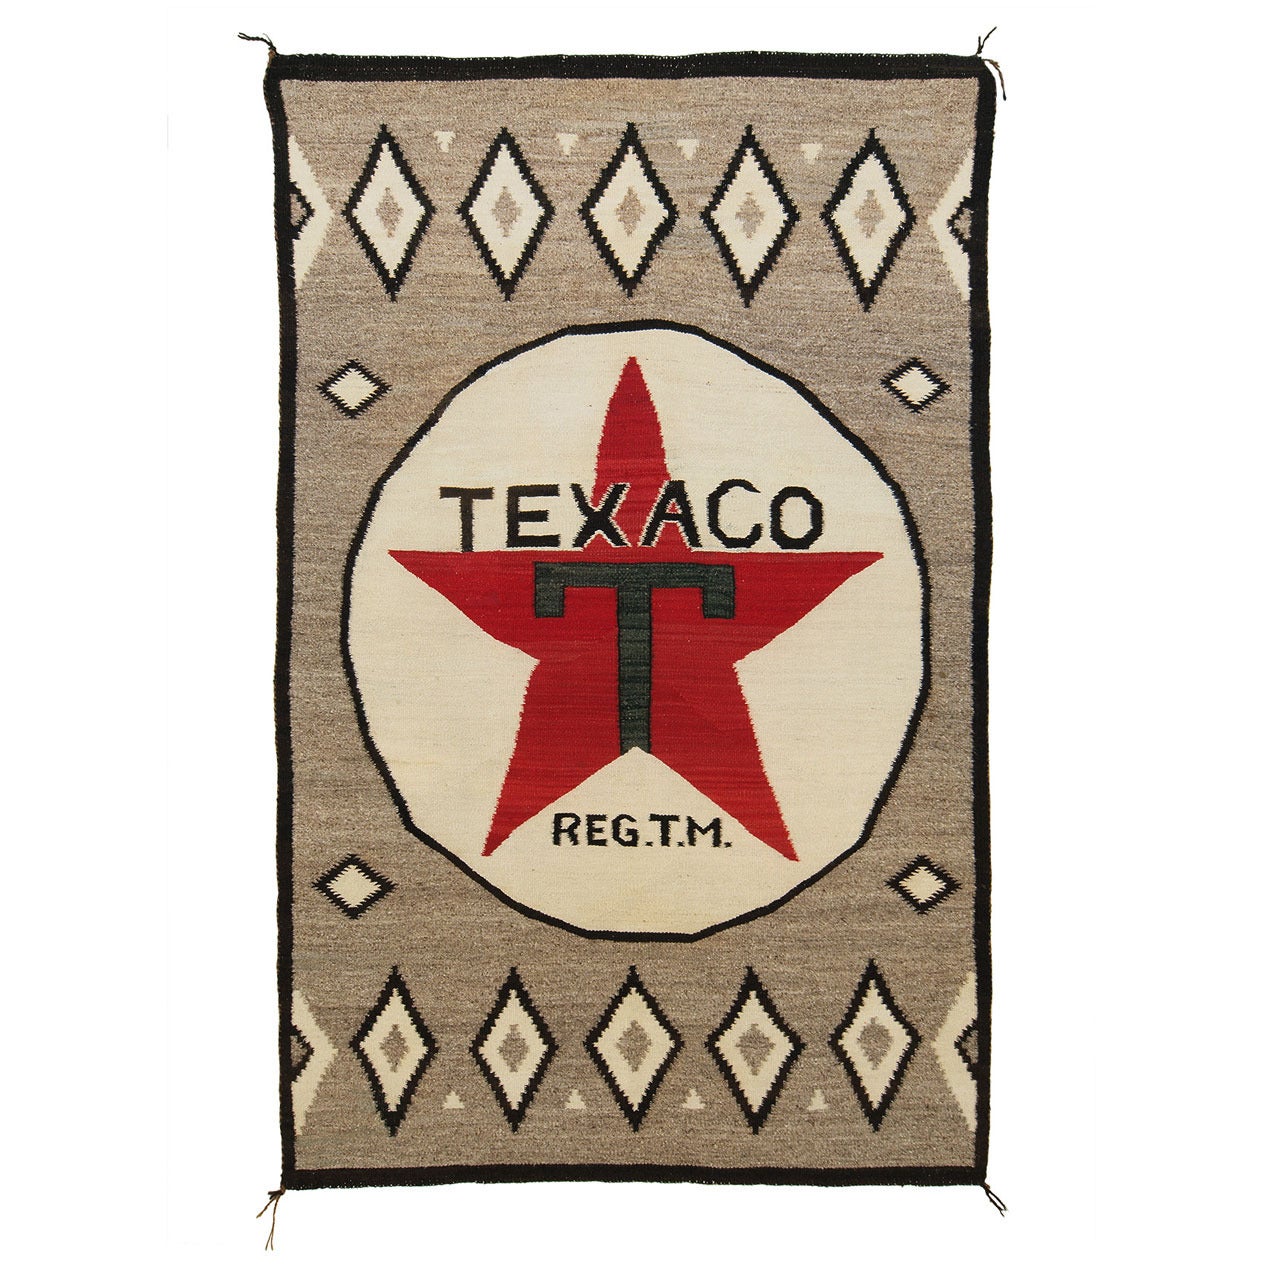 Navajo Pictorial Weaving "Texaco" circa 1930